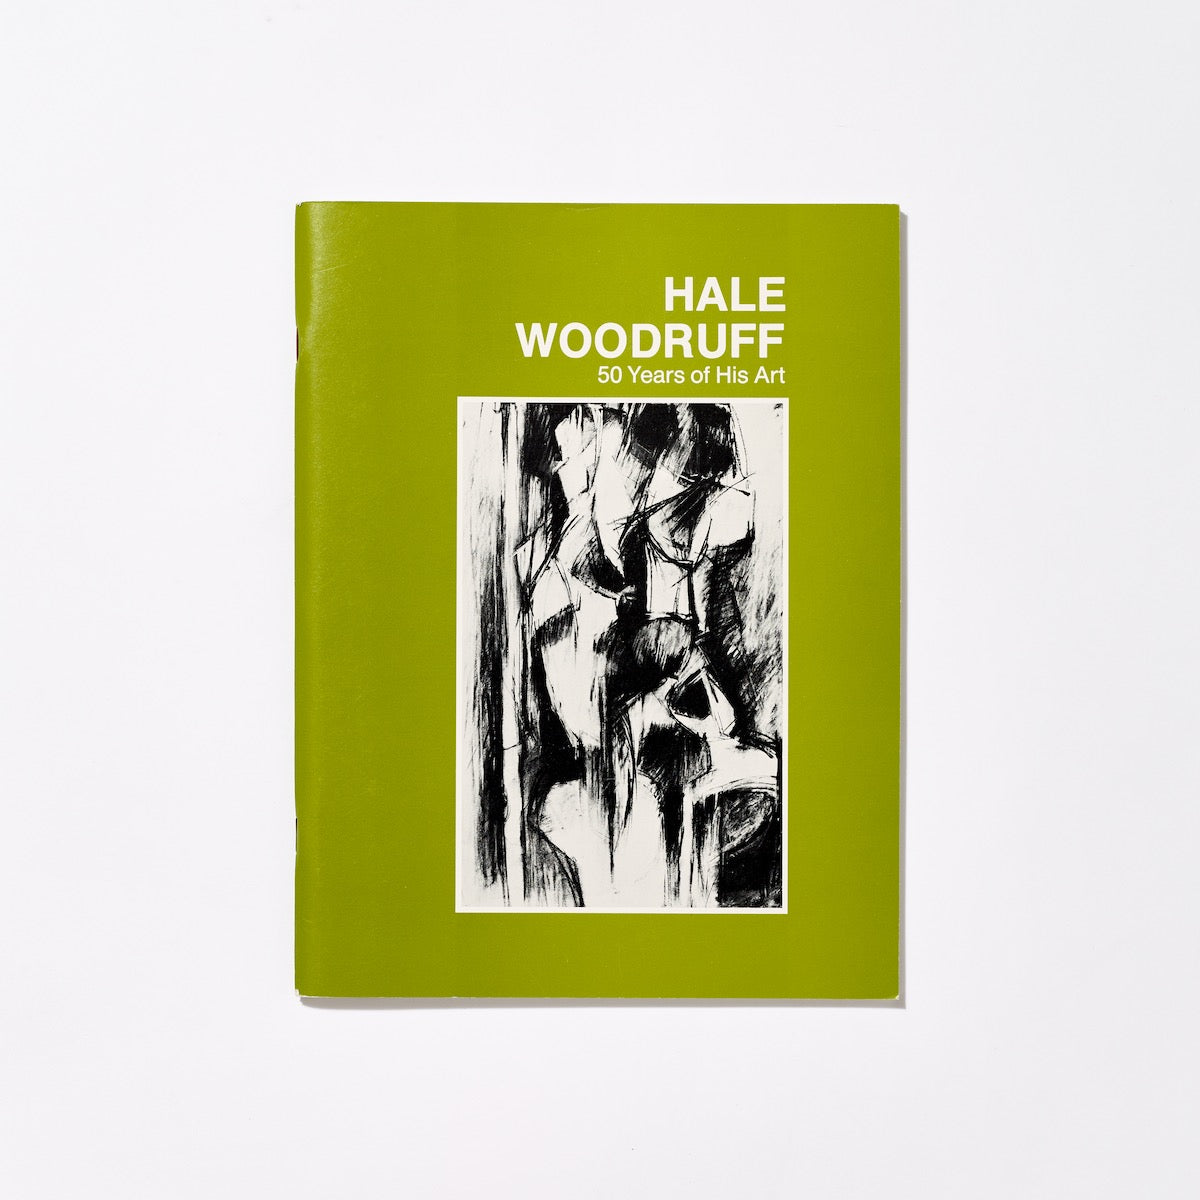 Hale Woodruff: 50 Years of His Art